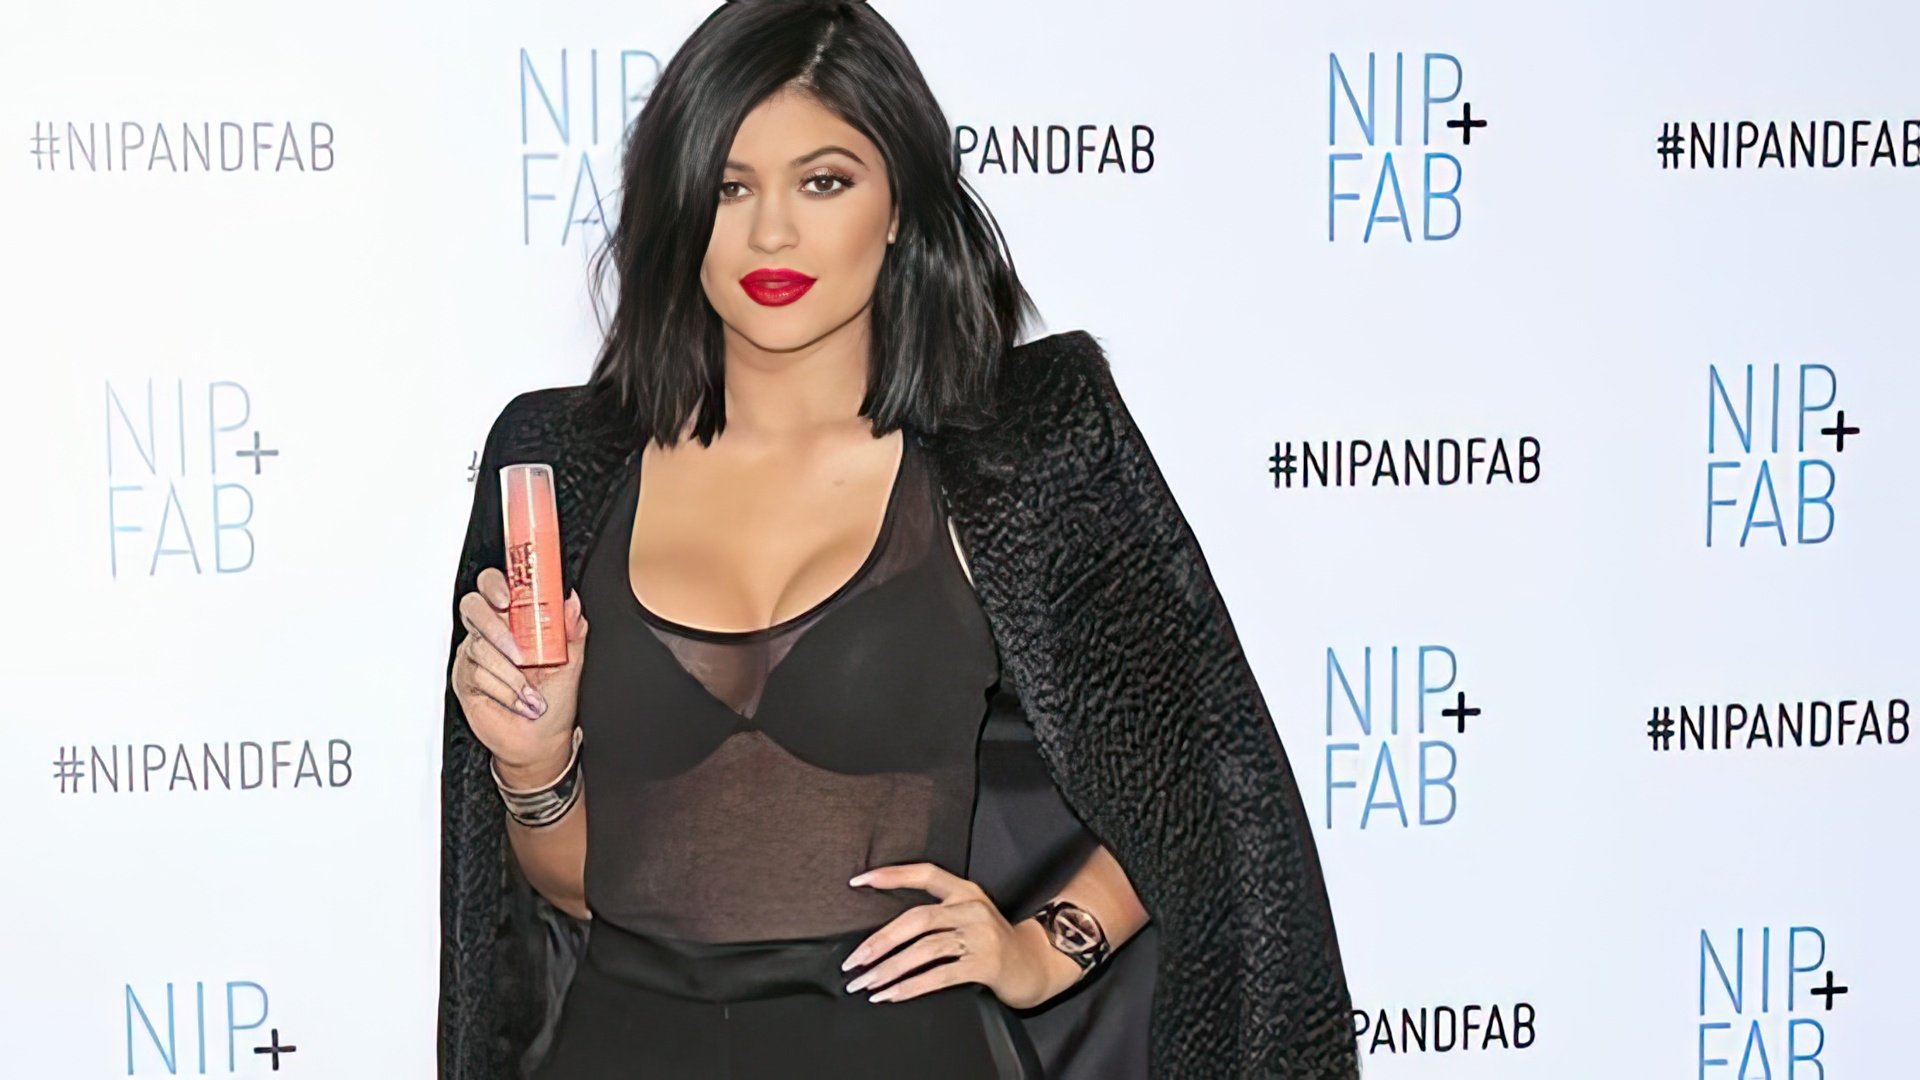 Kylie Jenner became the ambassador of Nip + Fab